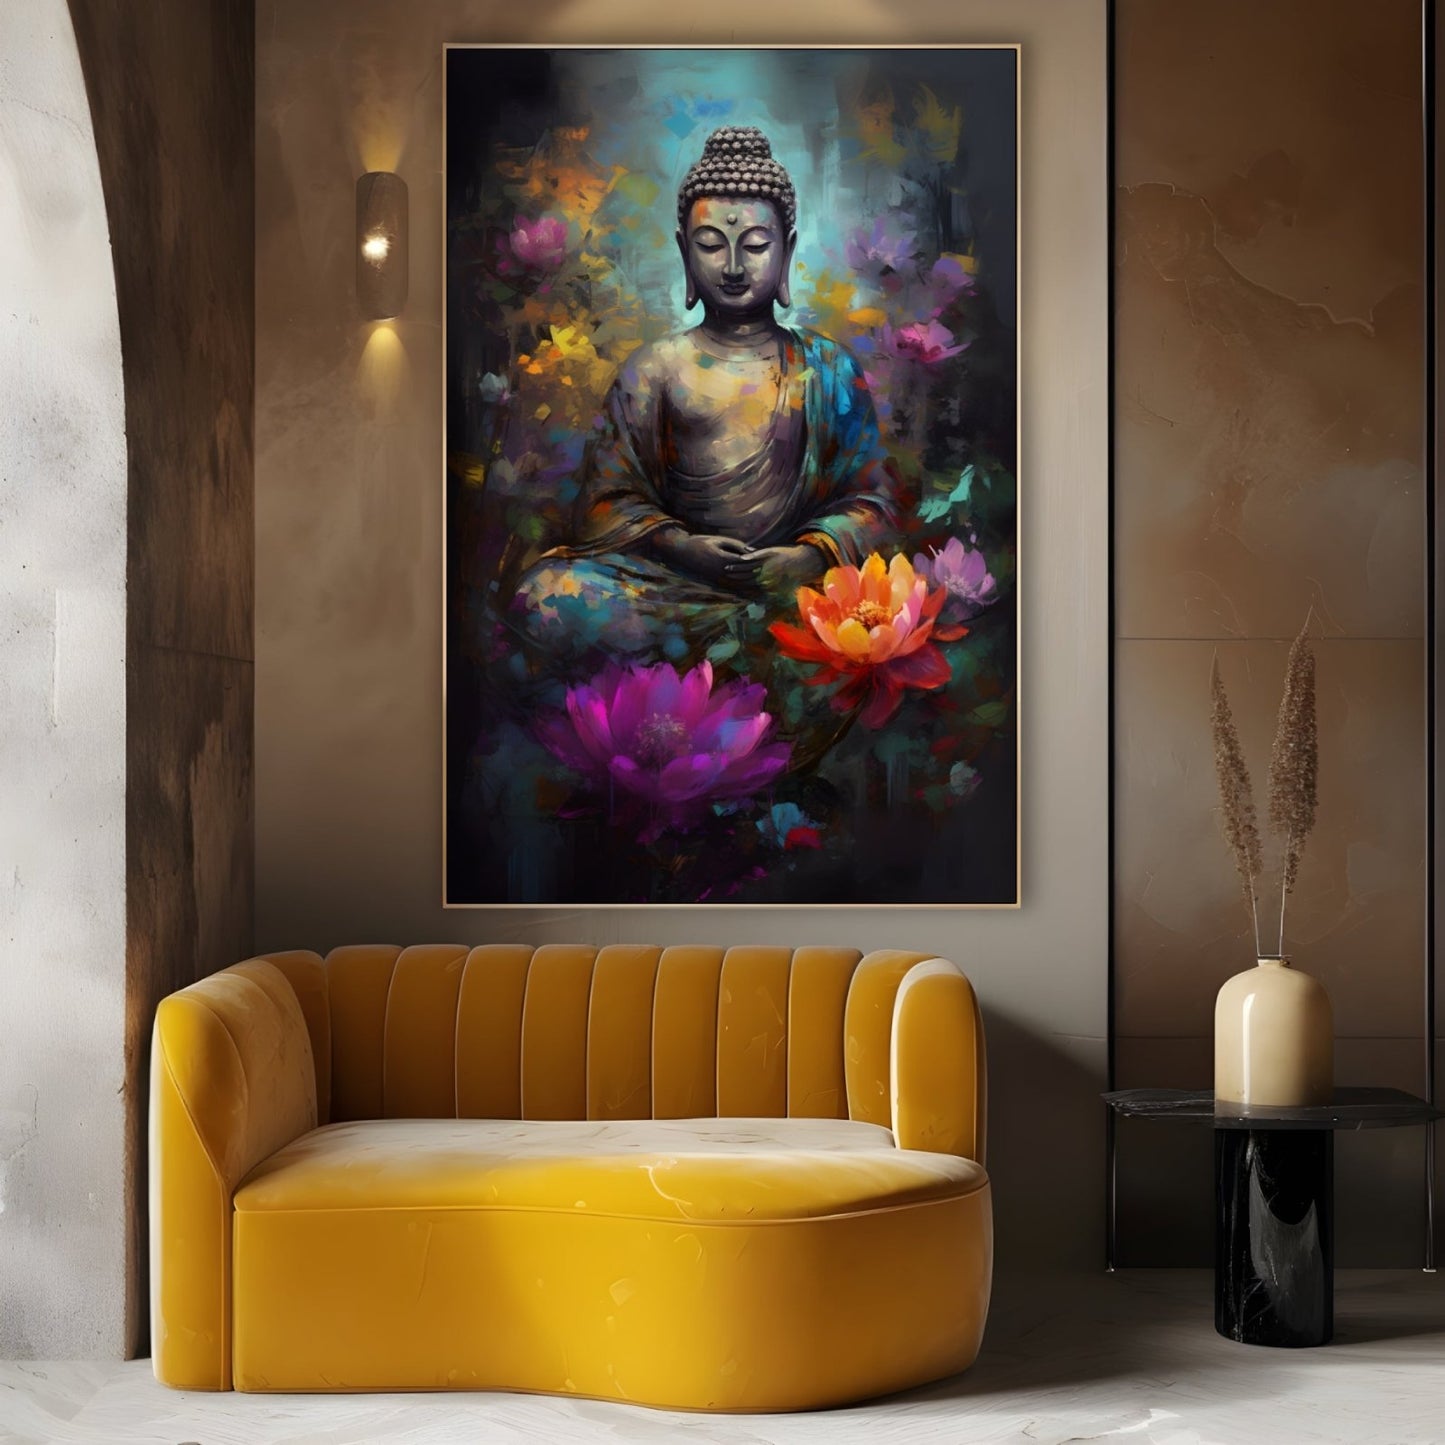 Blumenbuddha